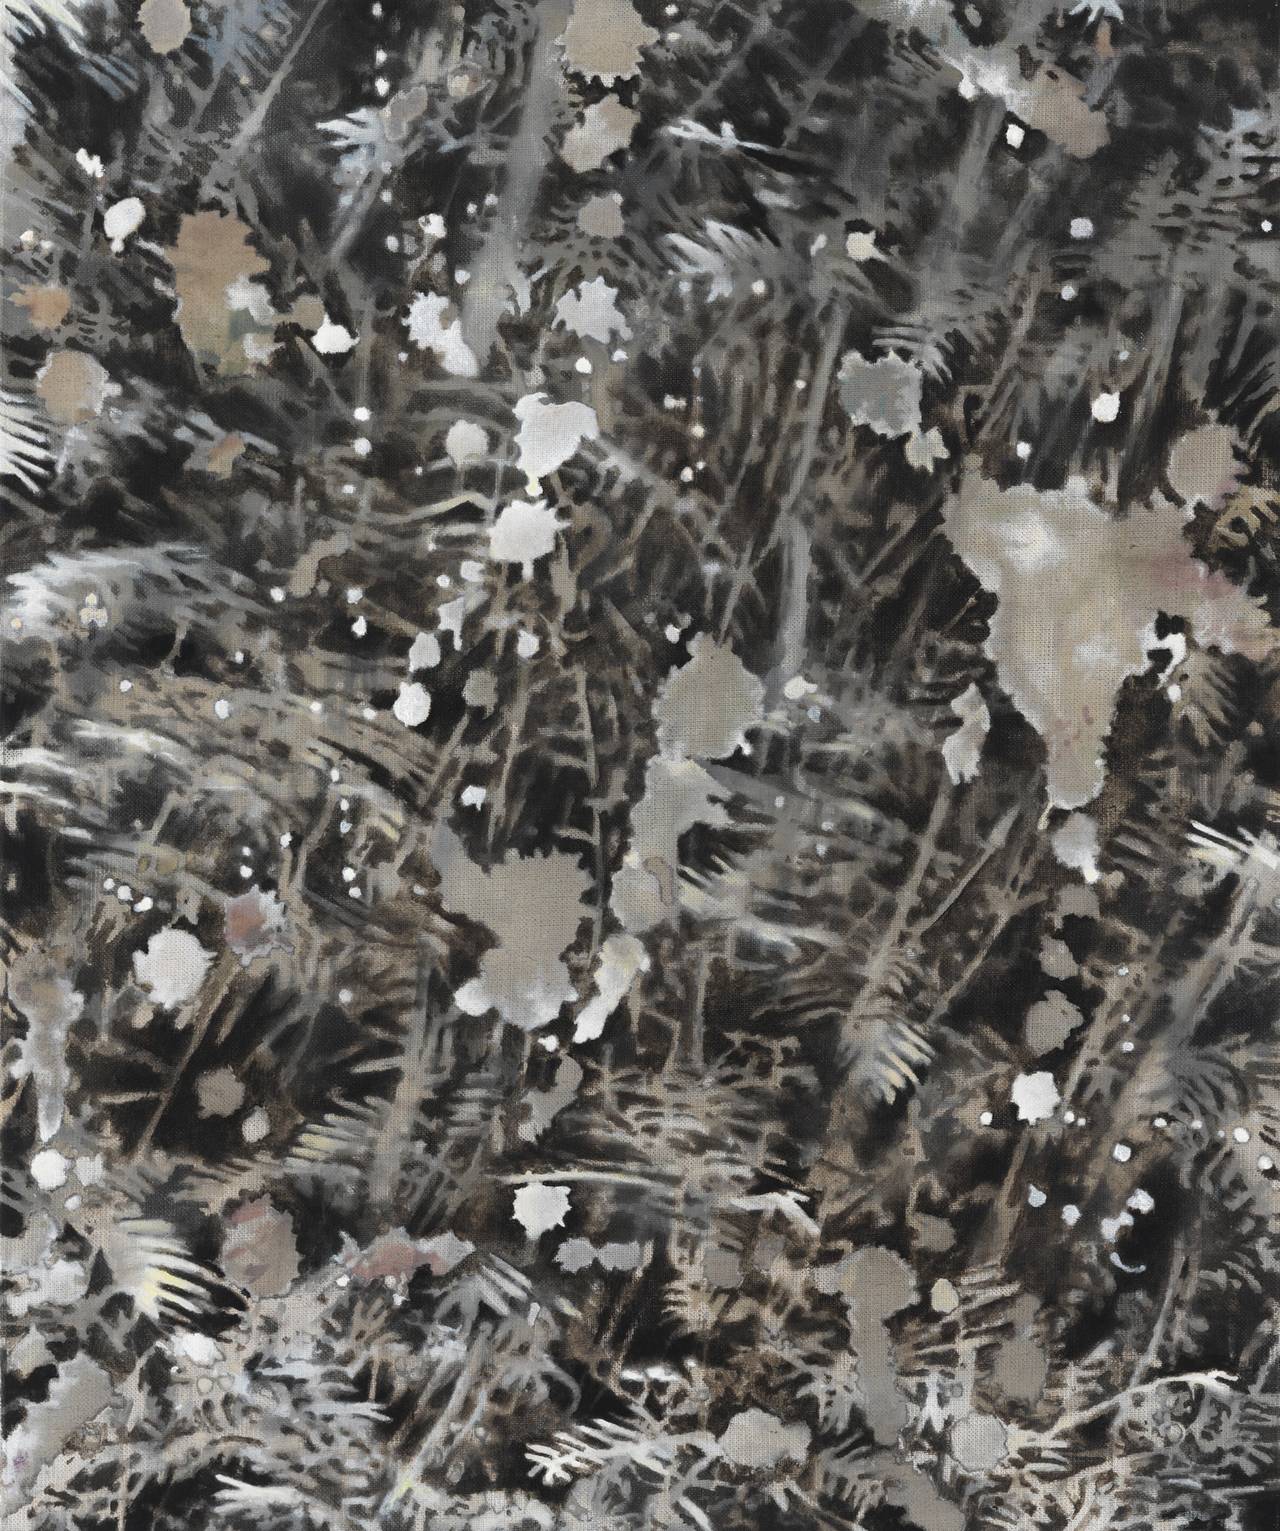 Jutta Haeckel Abstract Painting - Drippings 1